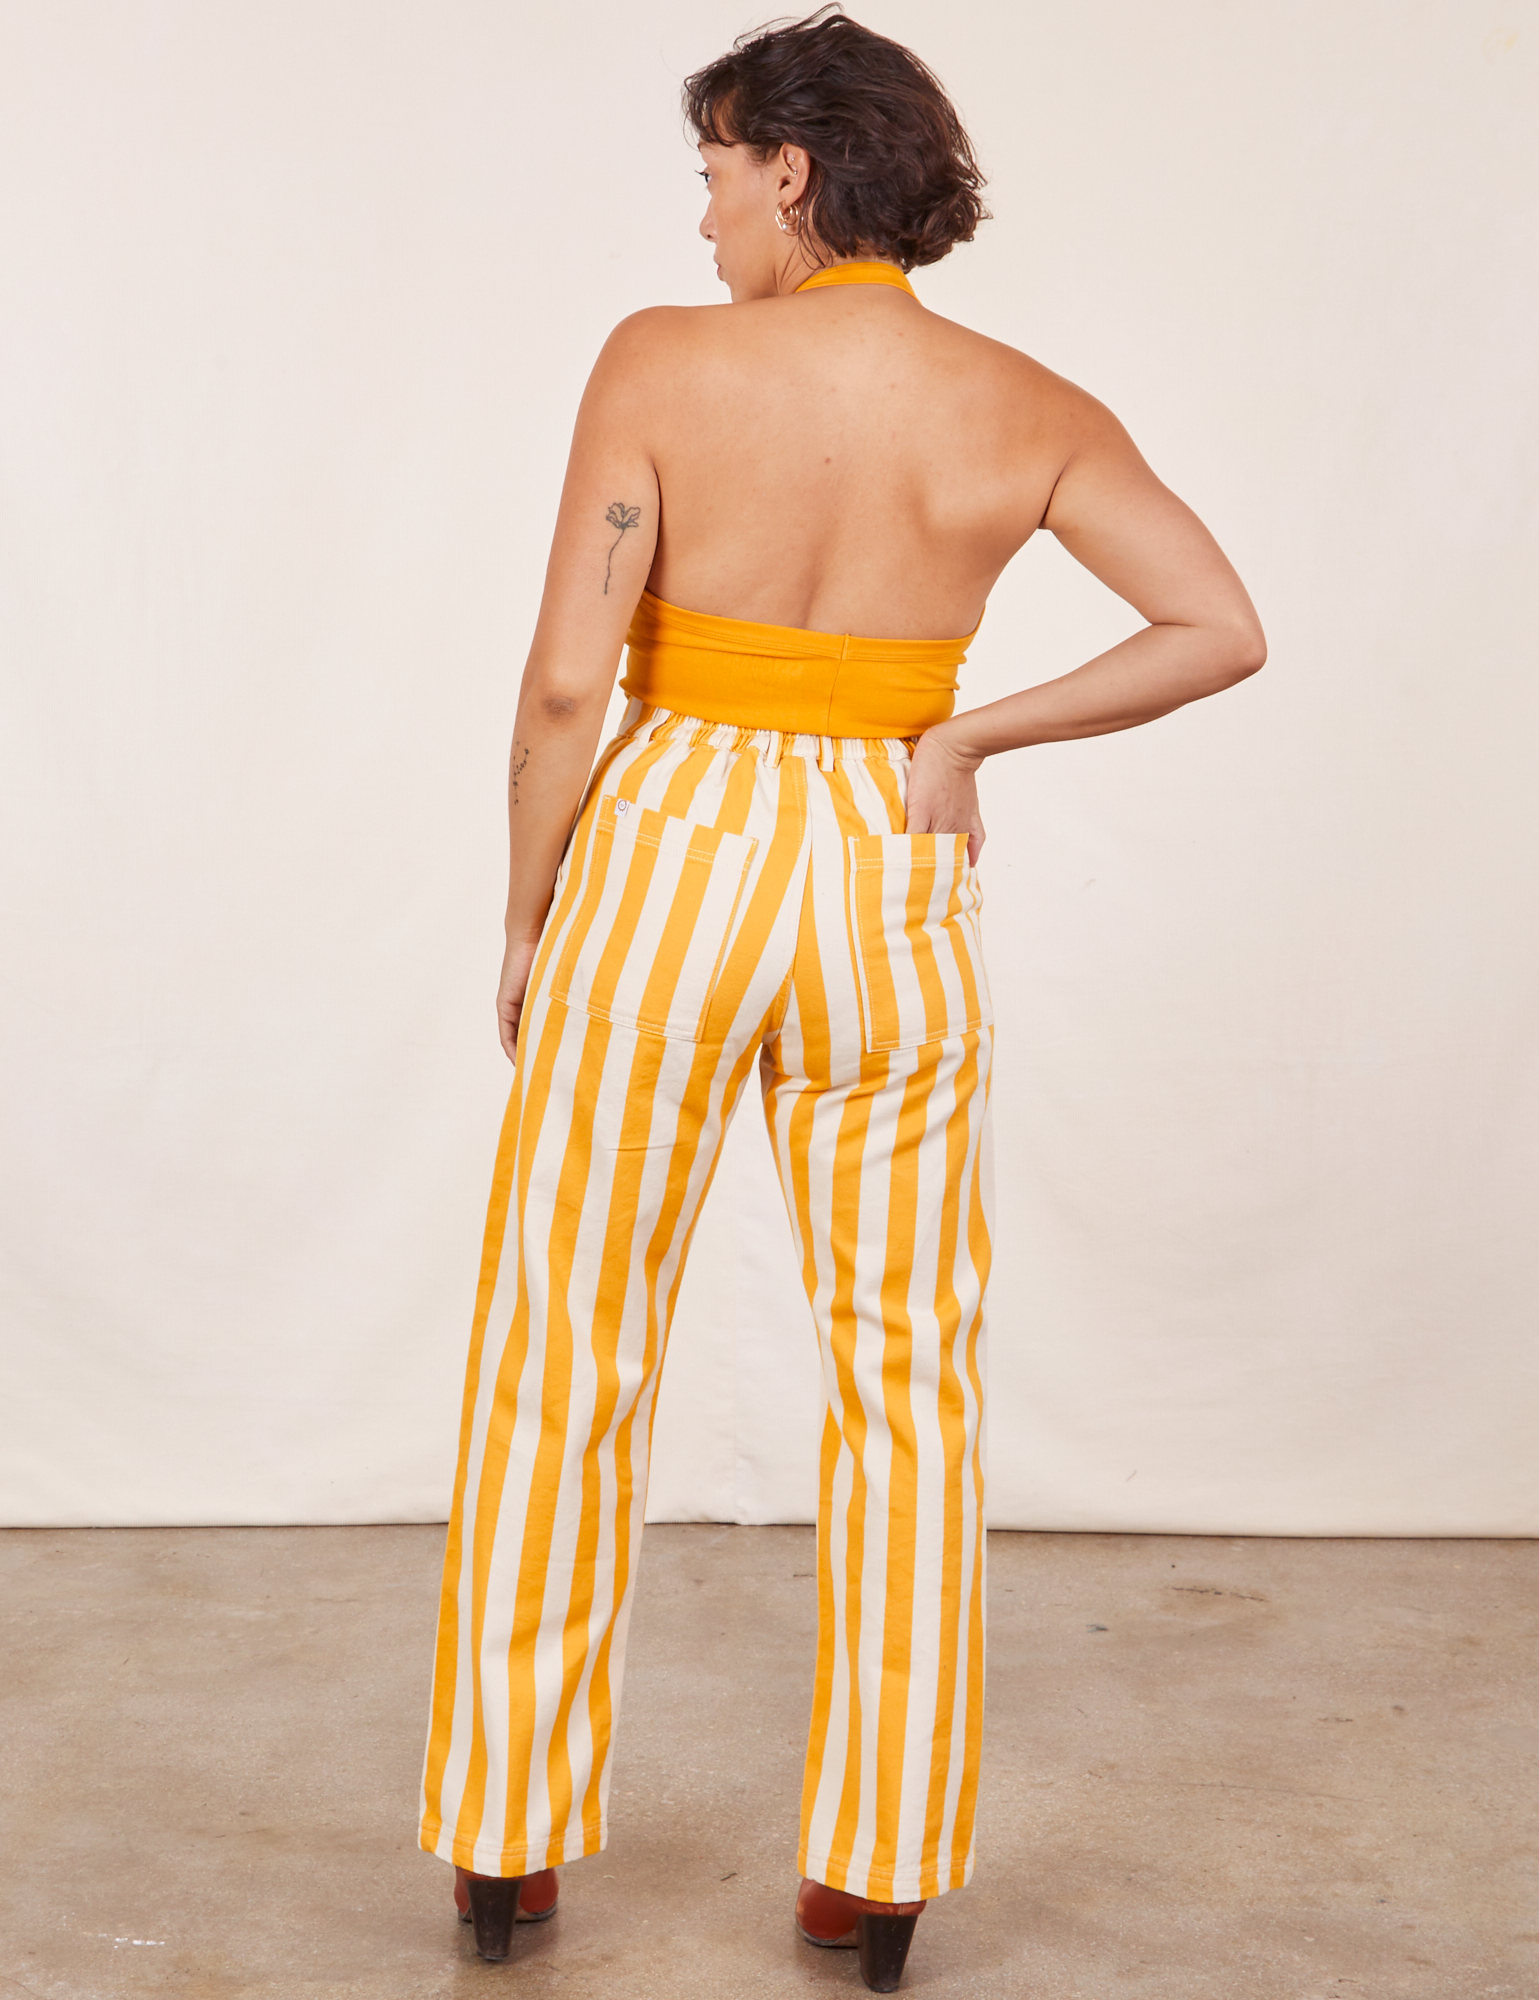 Back view of Work Pants in Lemon Stripe and mustard yellow Halter Top on Tiara